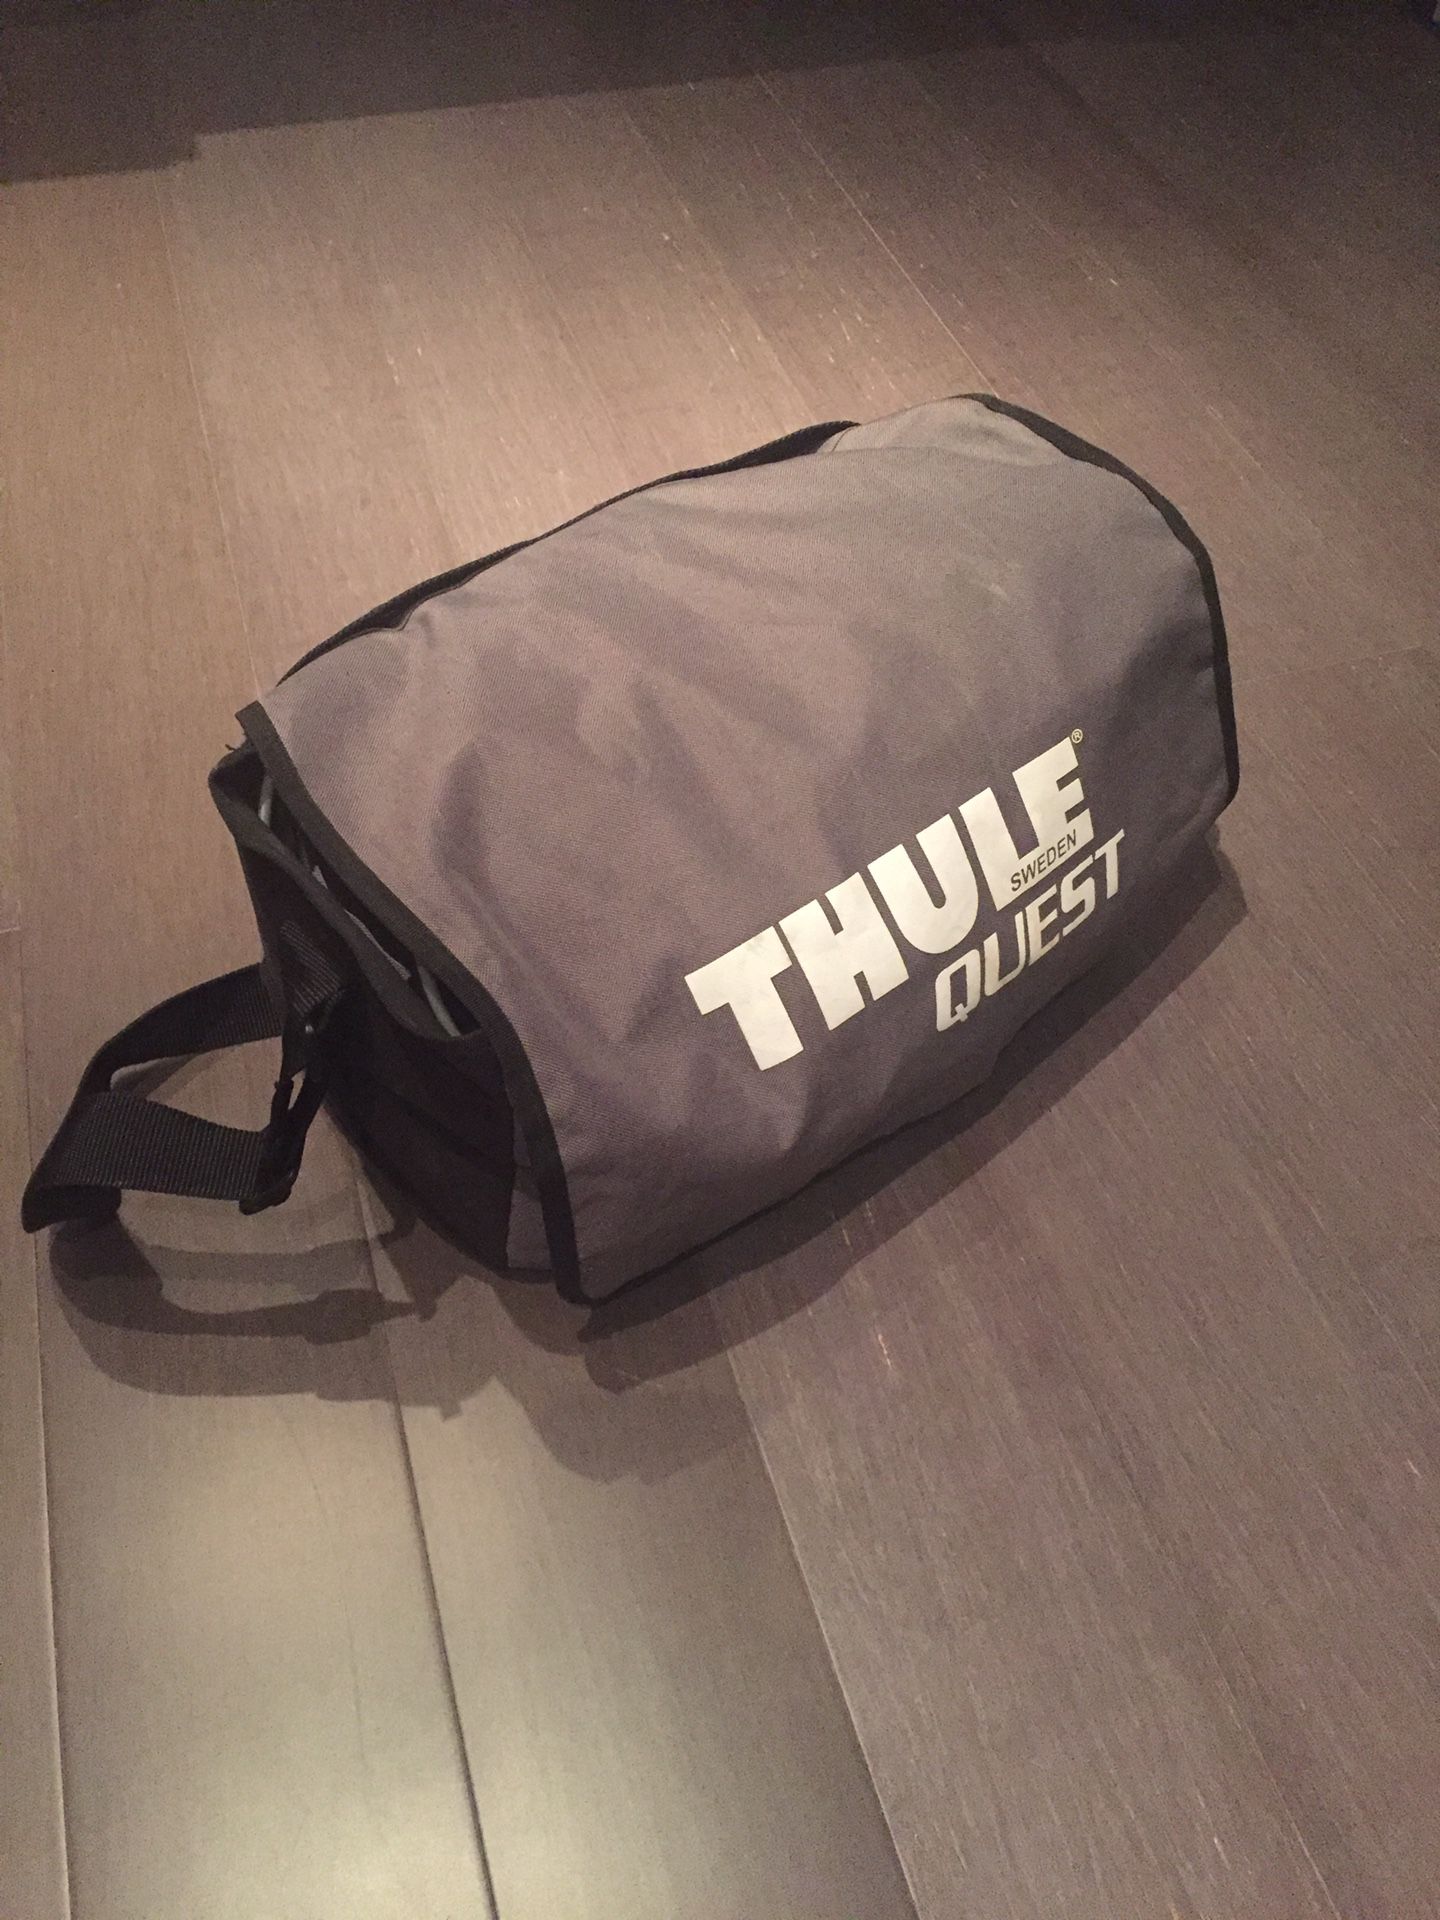 Thule Quest roof cargo bag